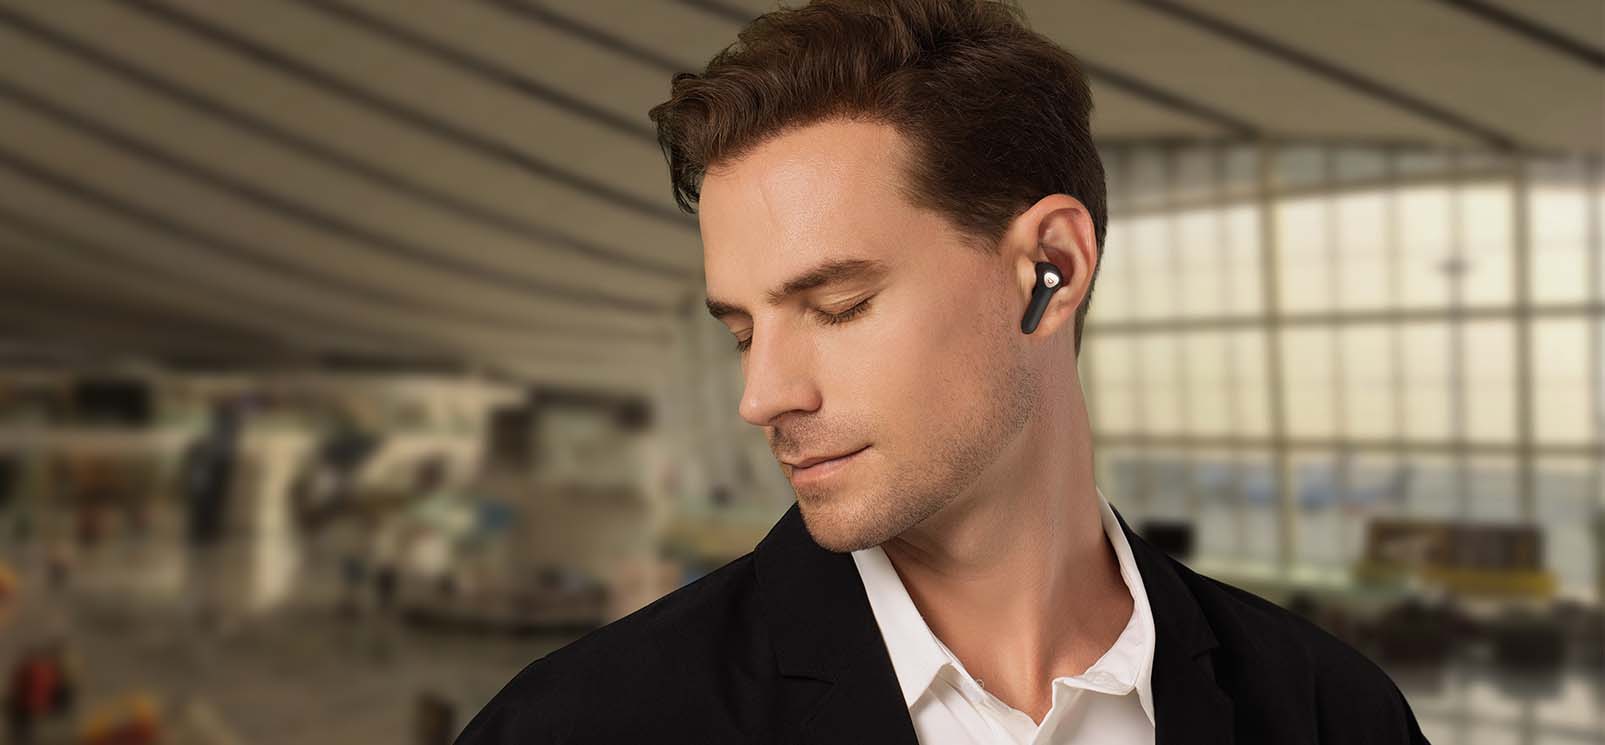 SOUNDPEATS Air3 Wireless Headphones Bluetooth Earbuds in-Ear